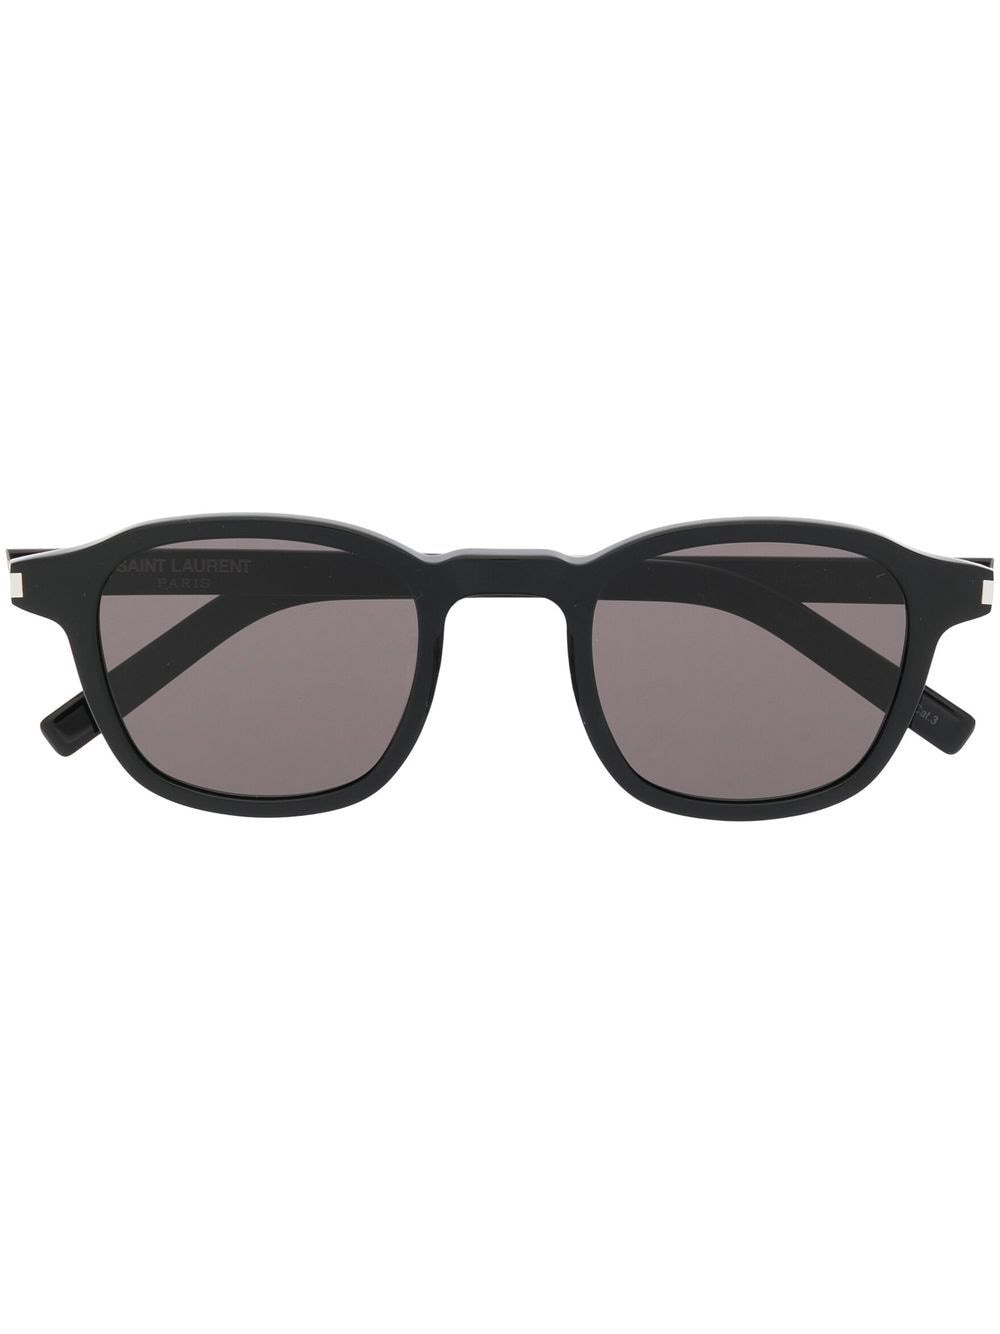 Saint Laurent Eyewear tinted-lens sunglasses - Black